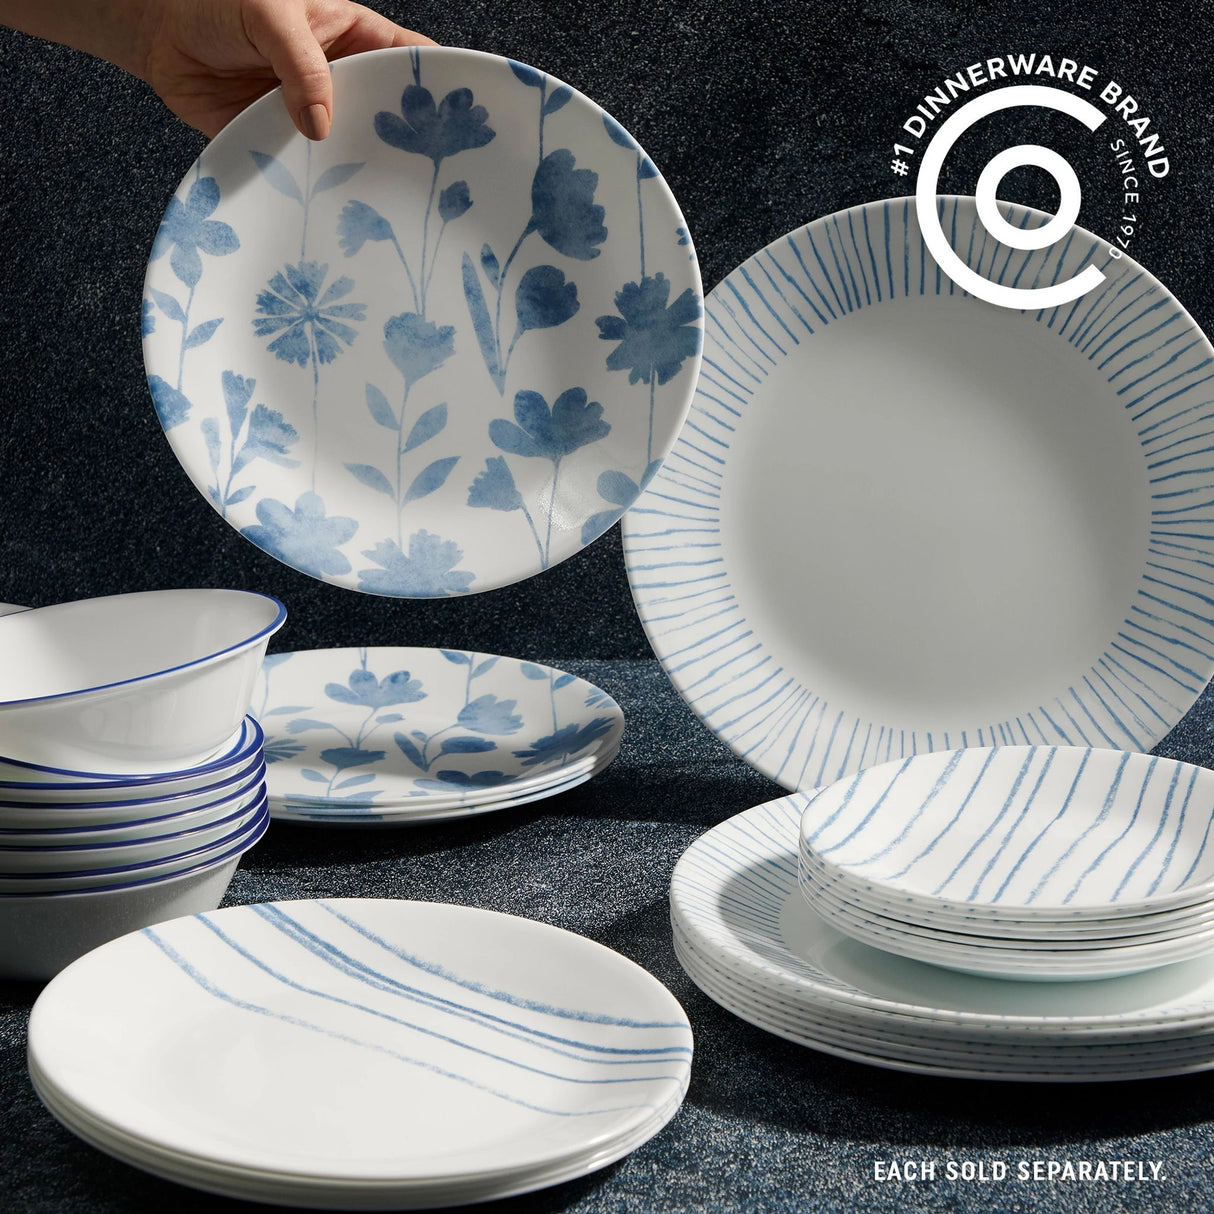  Botanical Stripes Dinnerware on tabletop with text #1 dinnerware brand